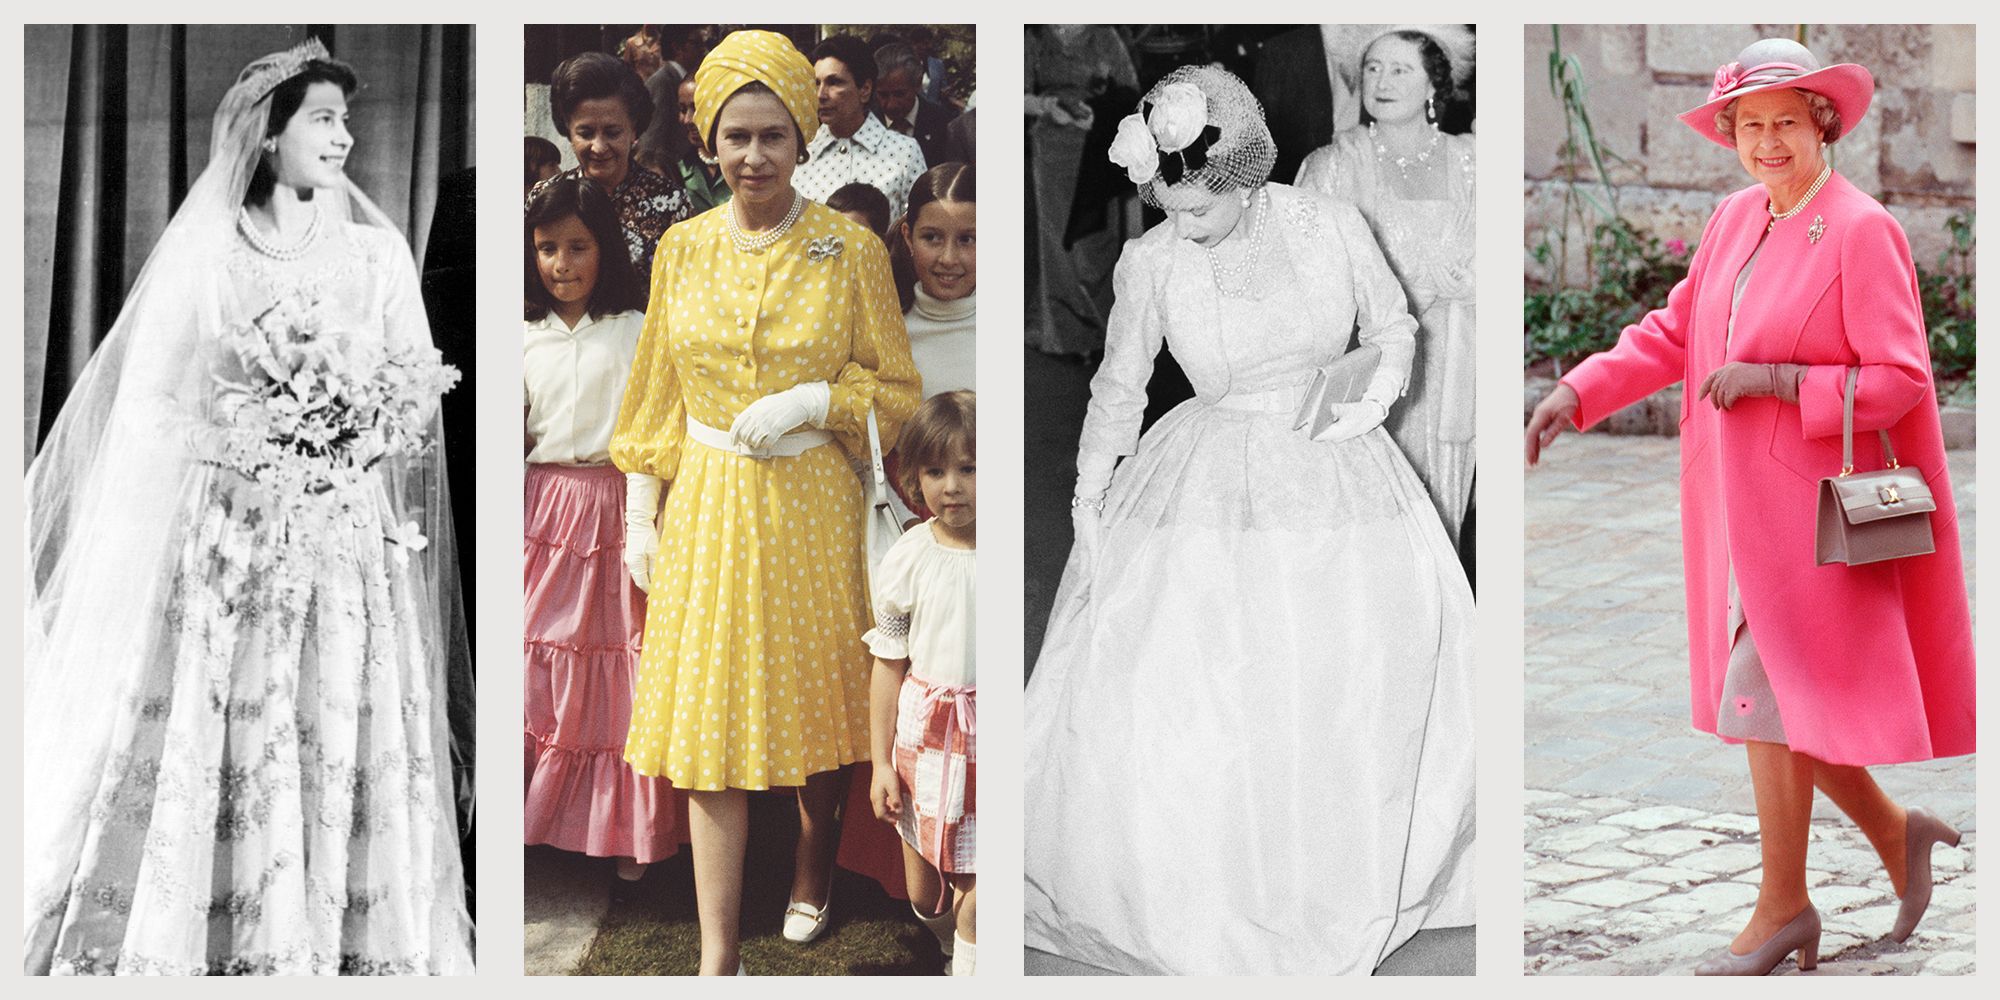 Dressed to impress: The classic uniforms of Queen Elizabeth II